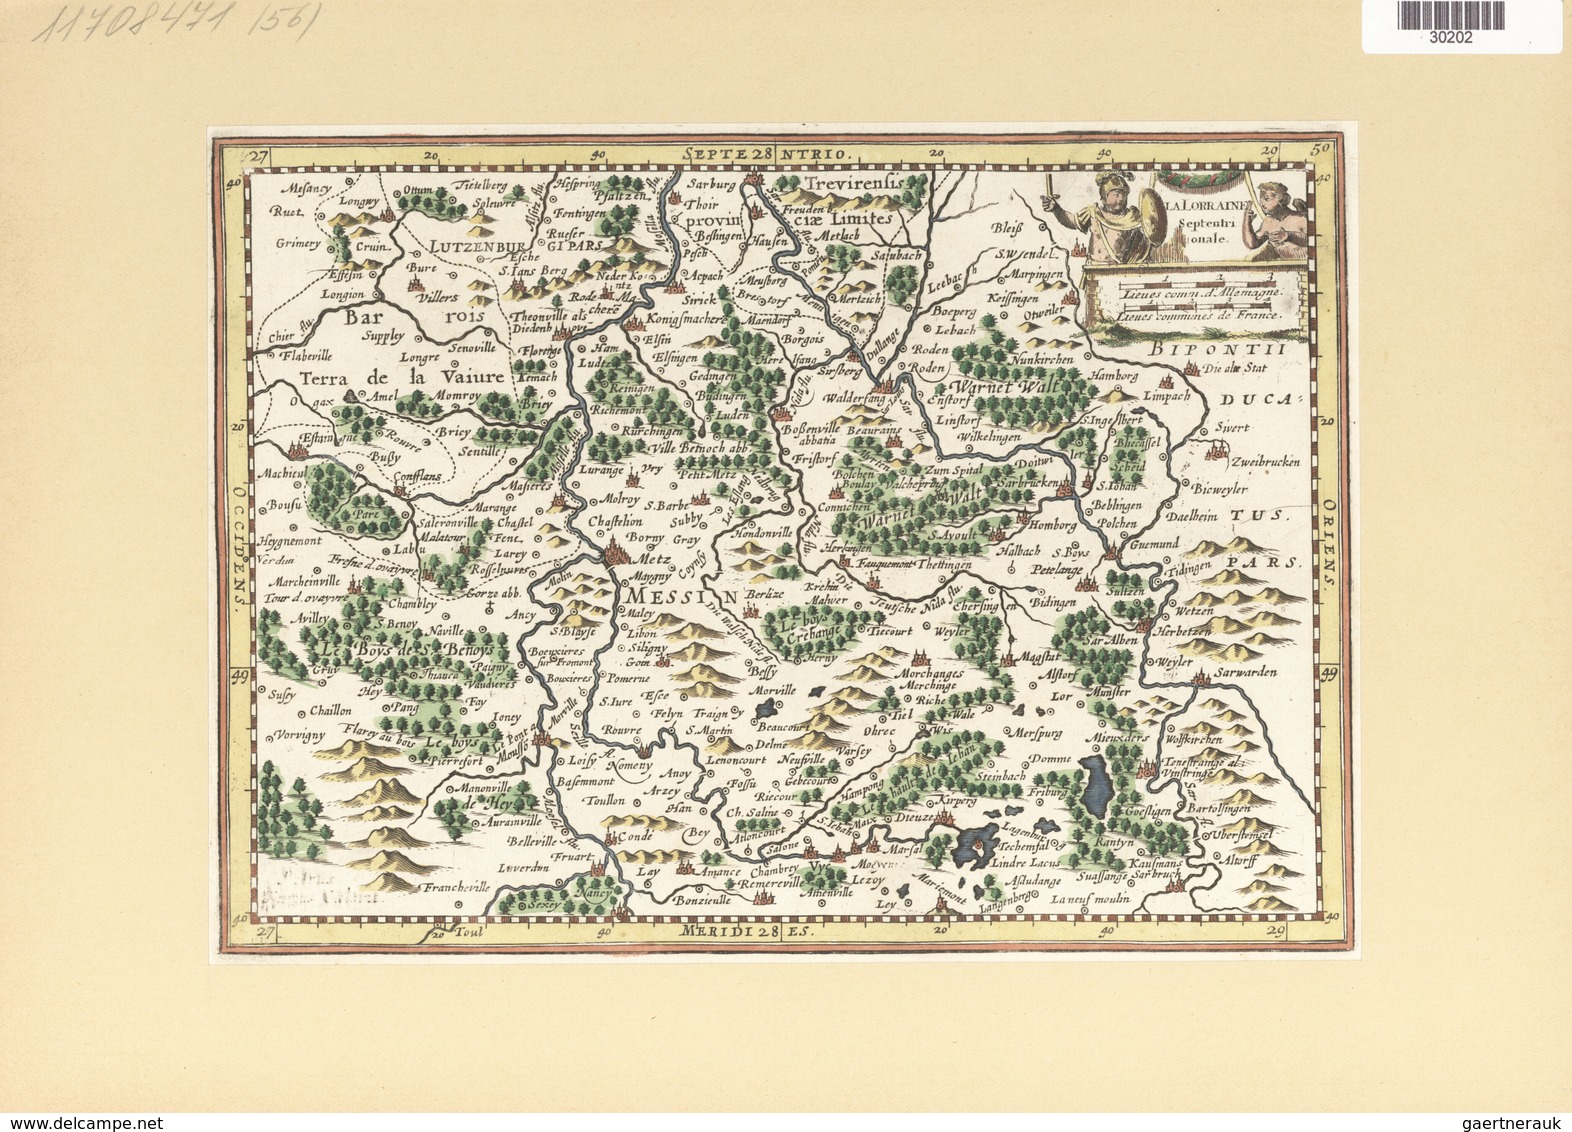 Landkarten Und Stiche: 1734. La Lorraine Septentionale, Published In The Mercator Atlas Minor 1734 E - Géographie